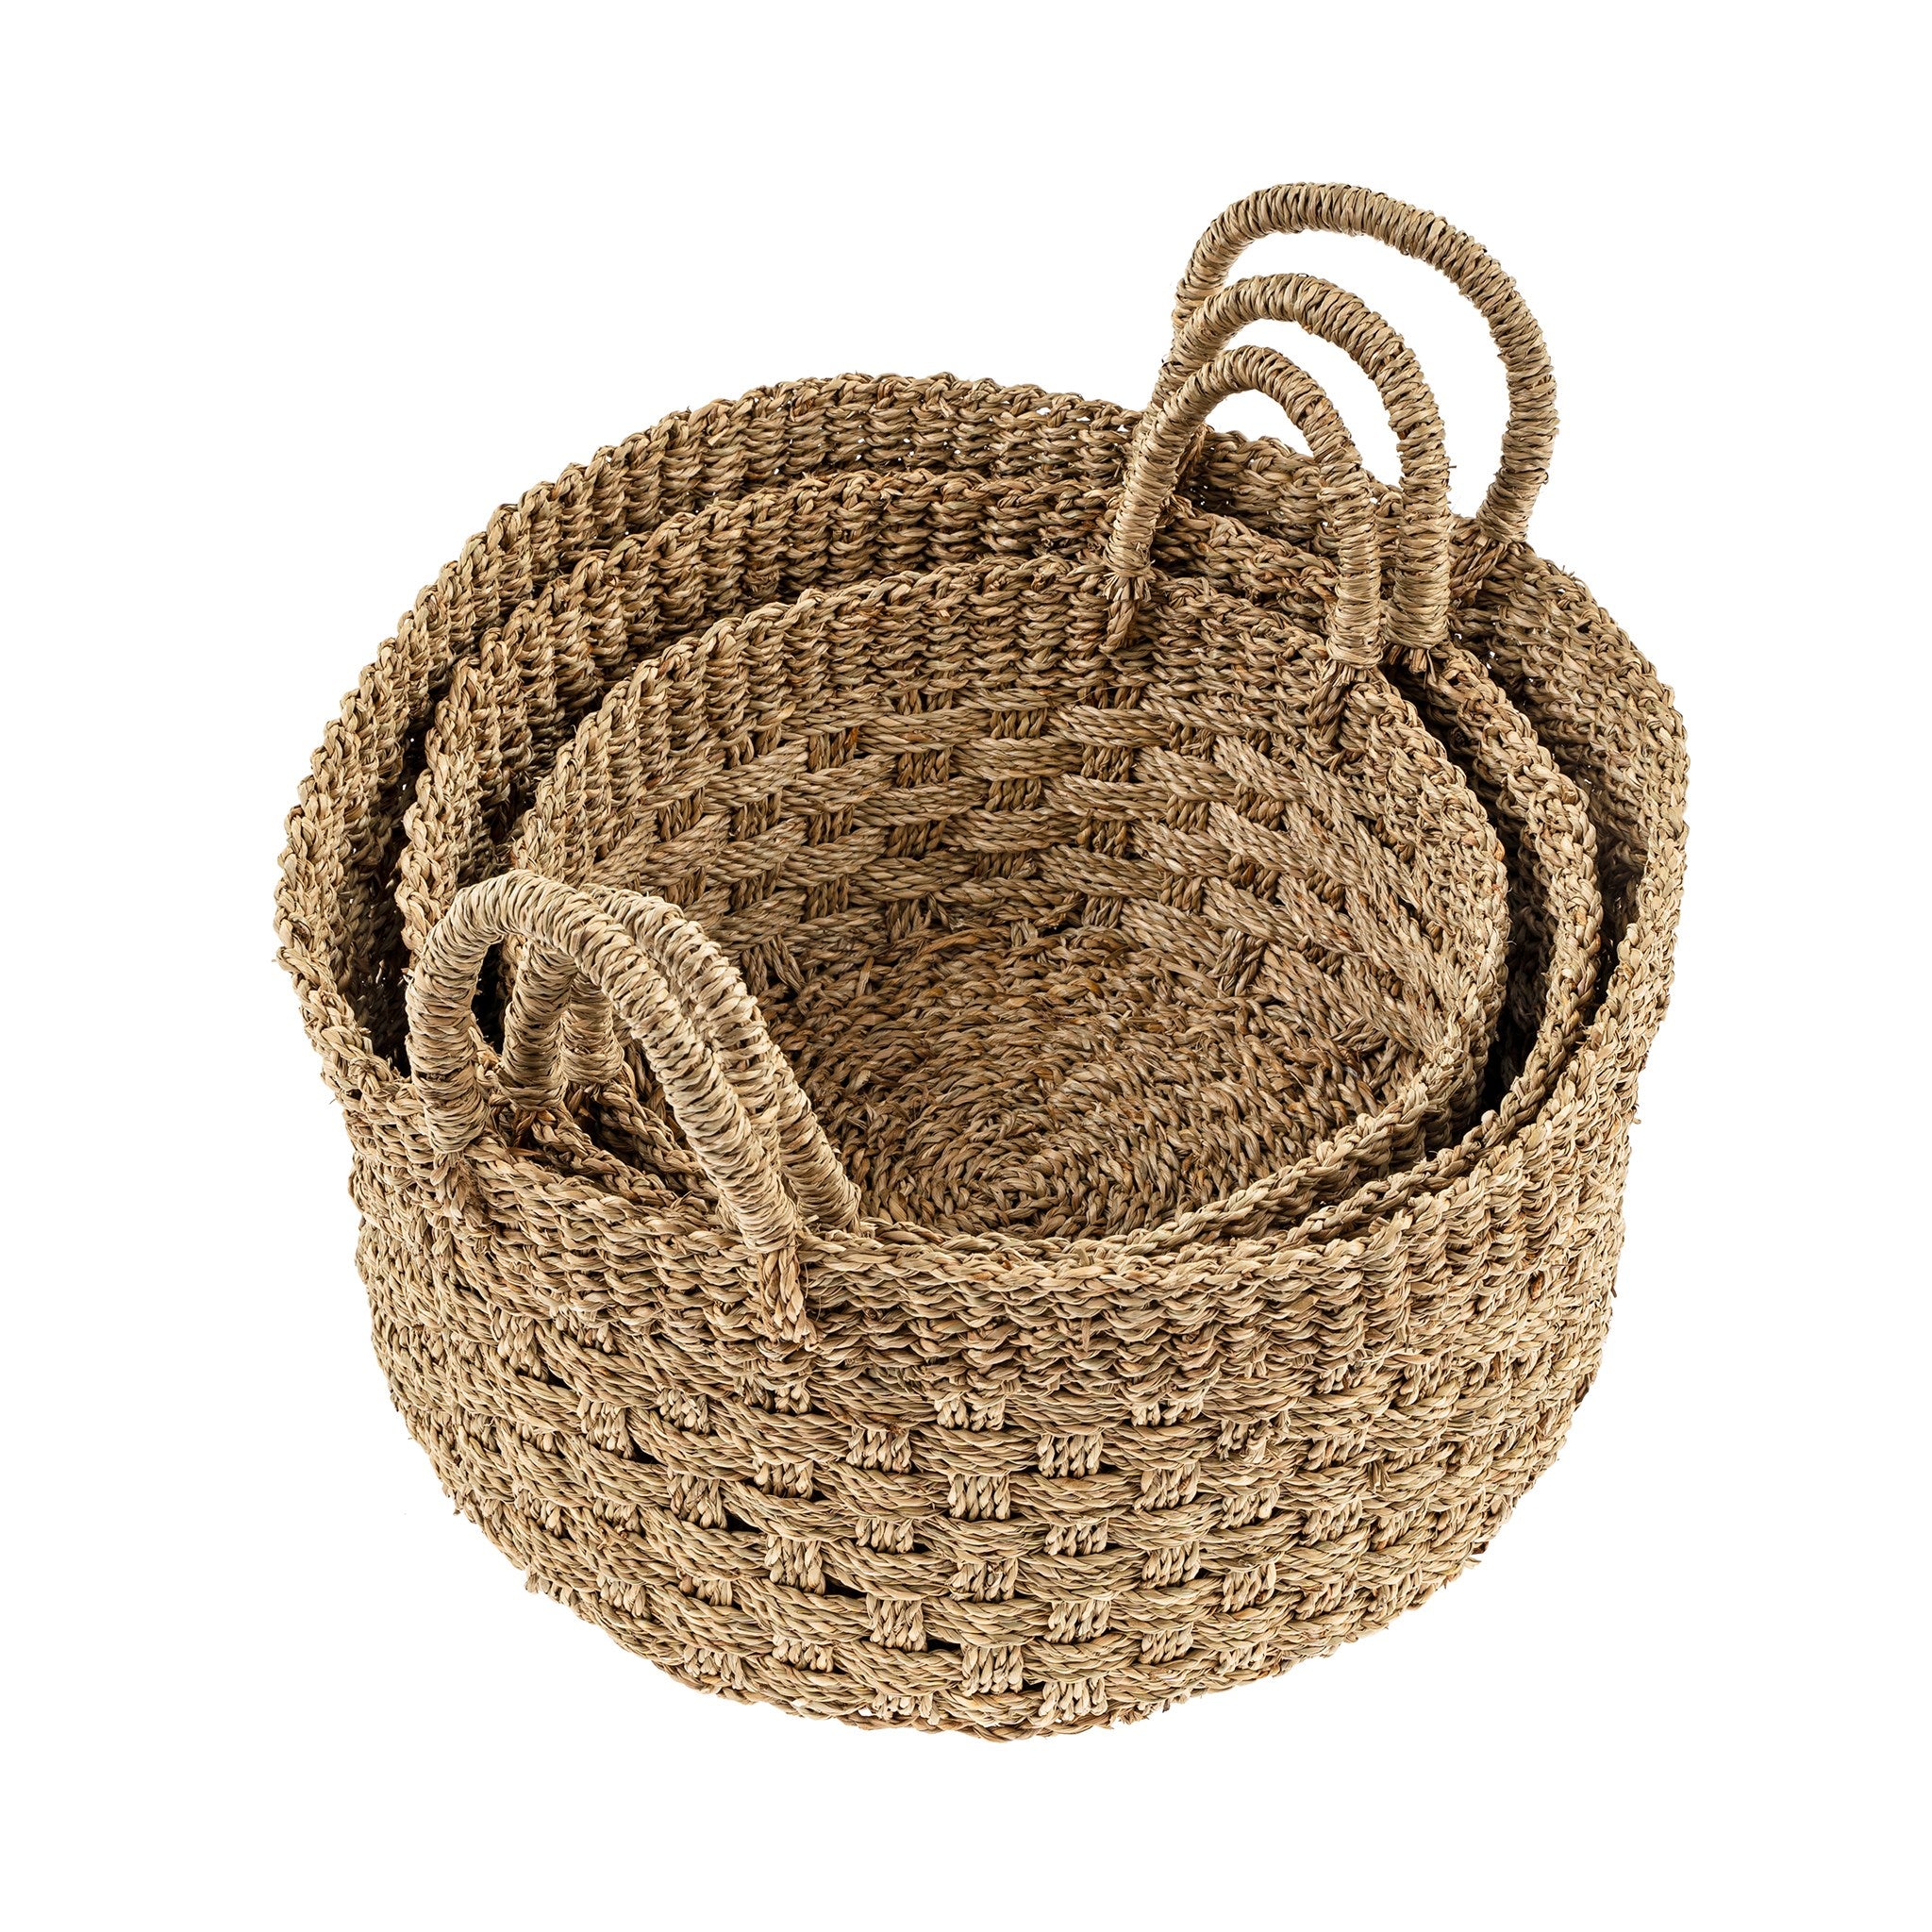 Bimini Baskets Round - Set of 3